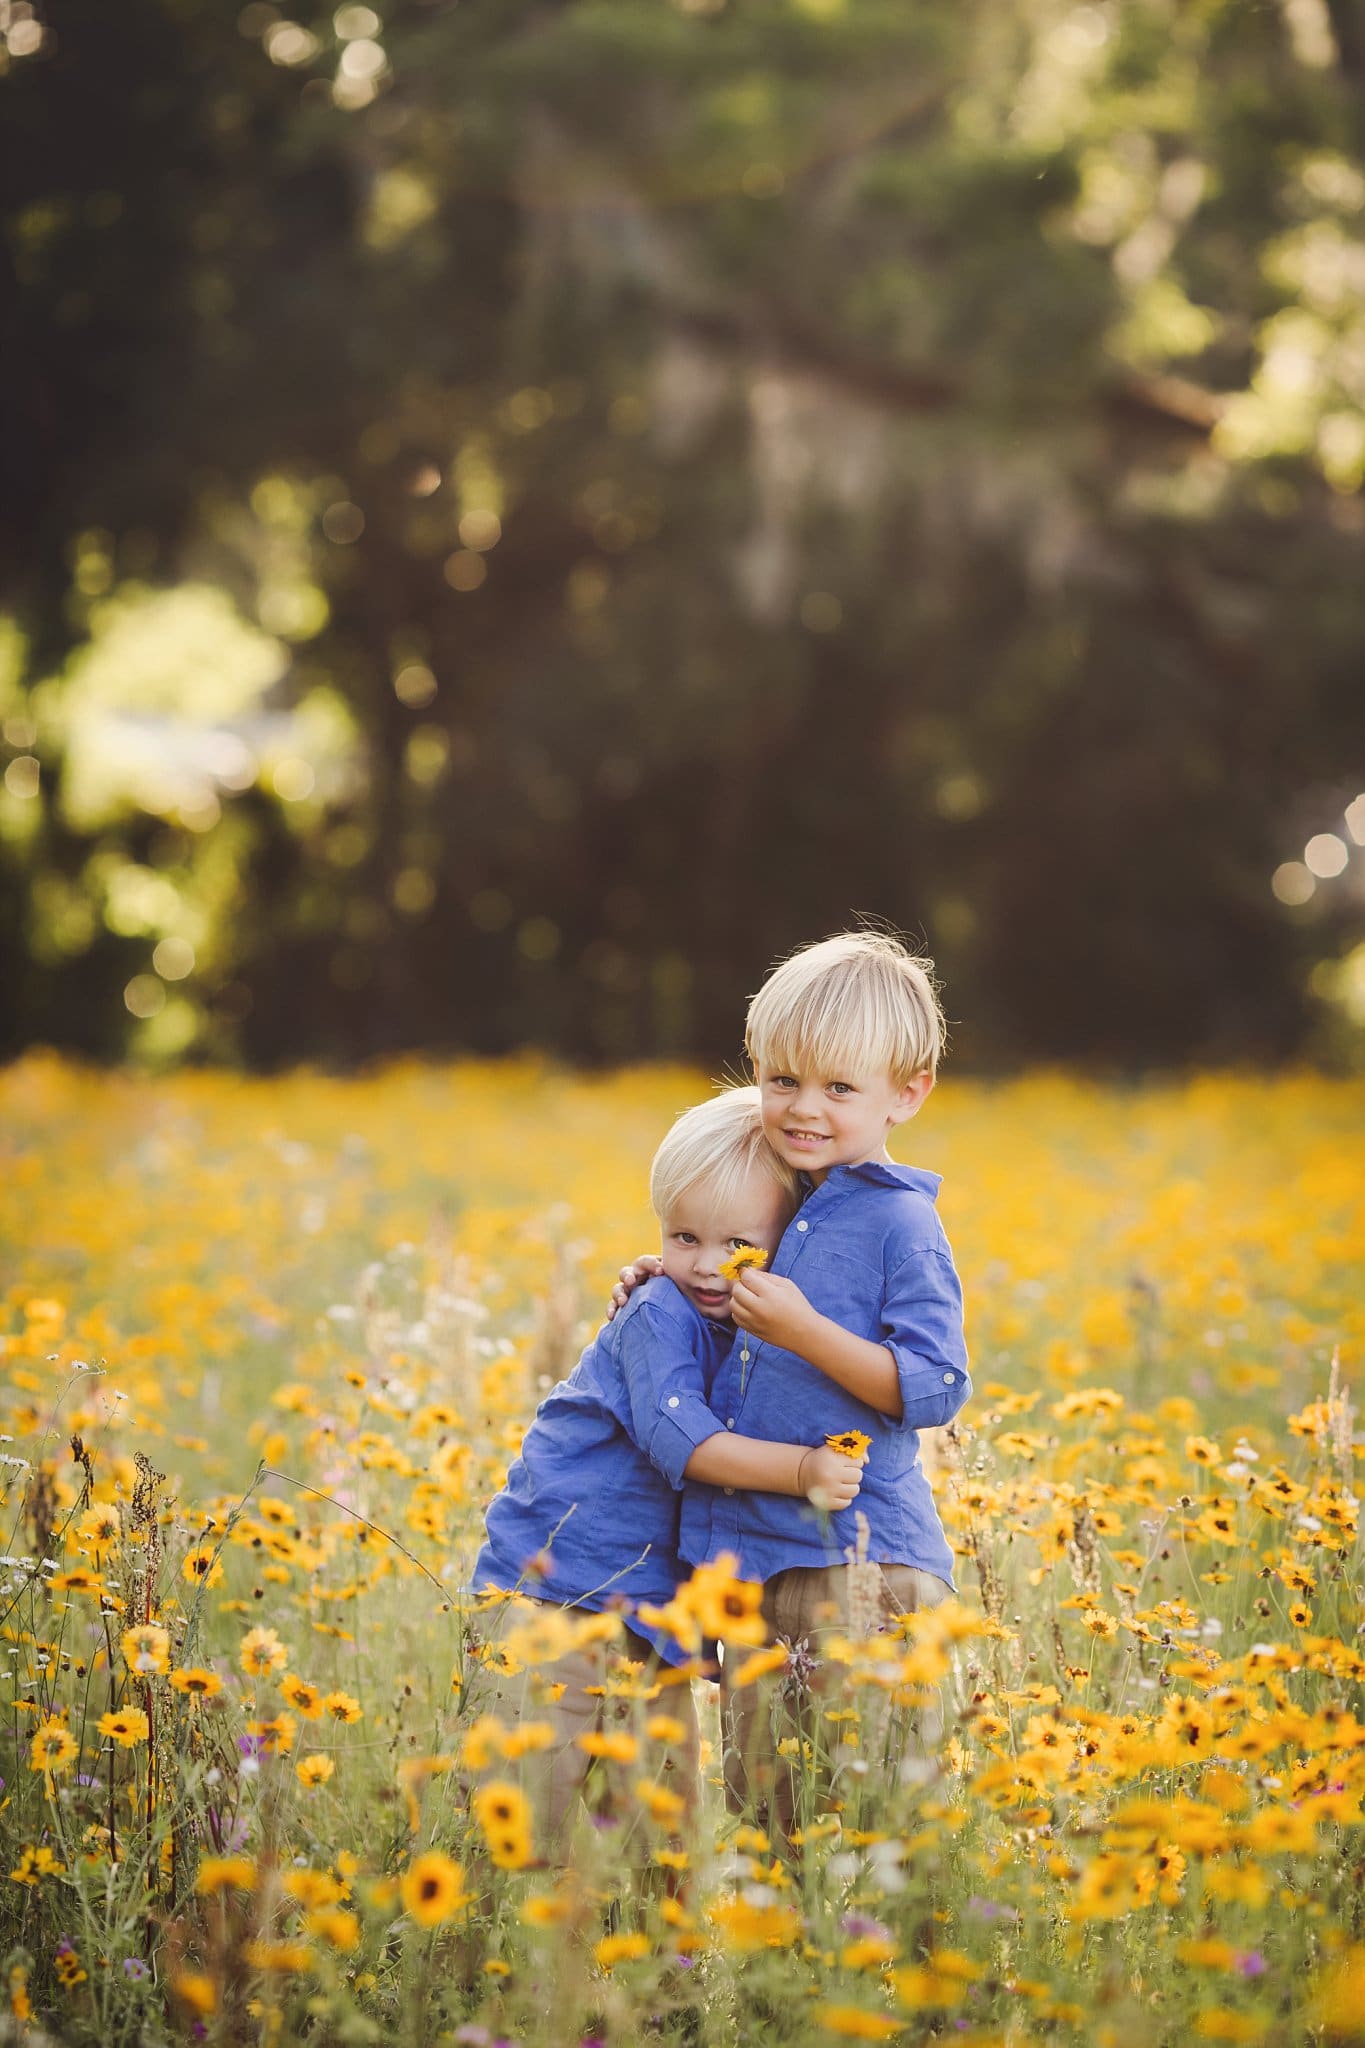 NE FL Family Photography brothers running through yellow flower field